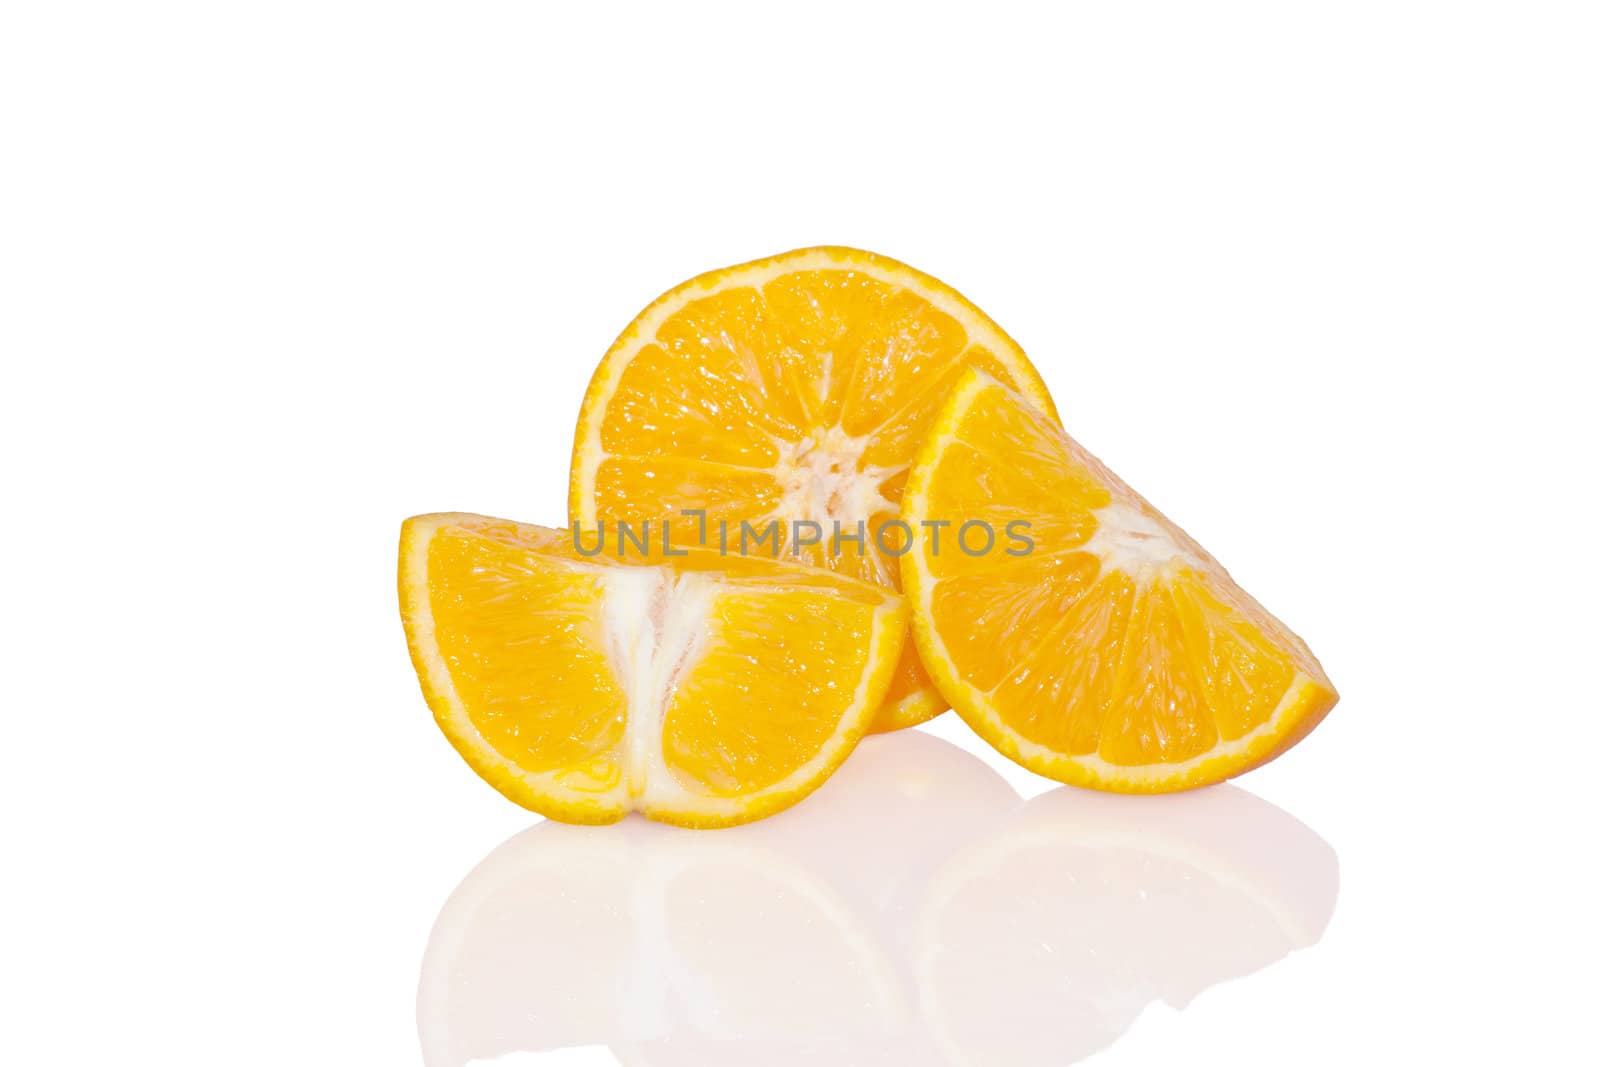 Ripe orange slices by georgenightingale